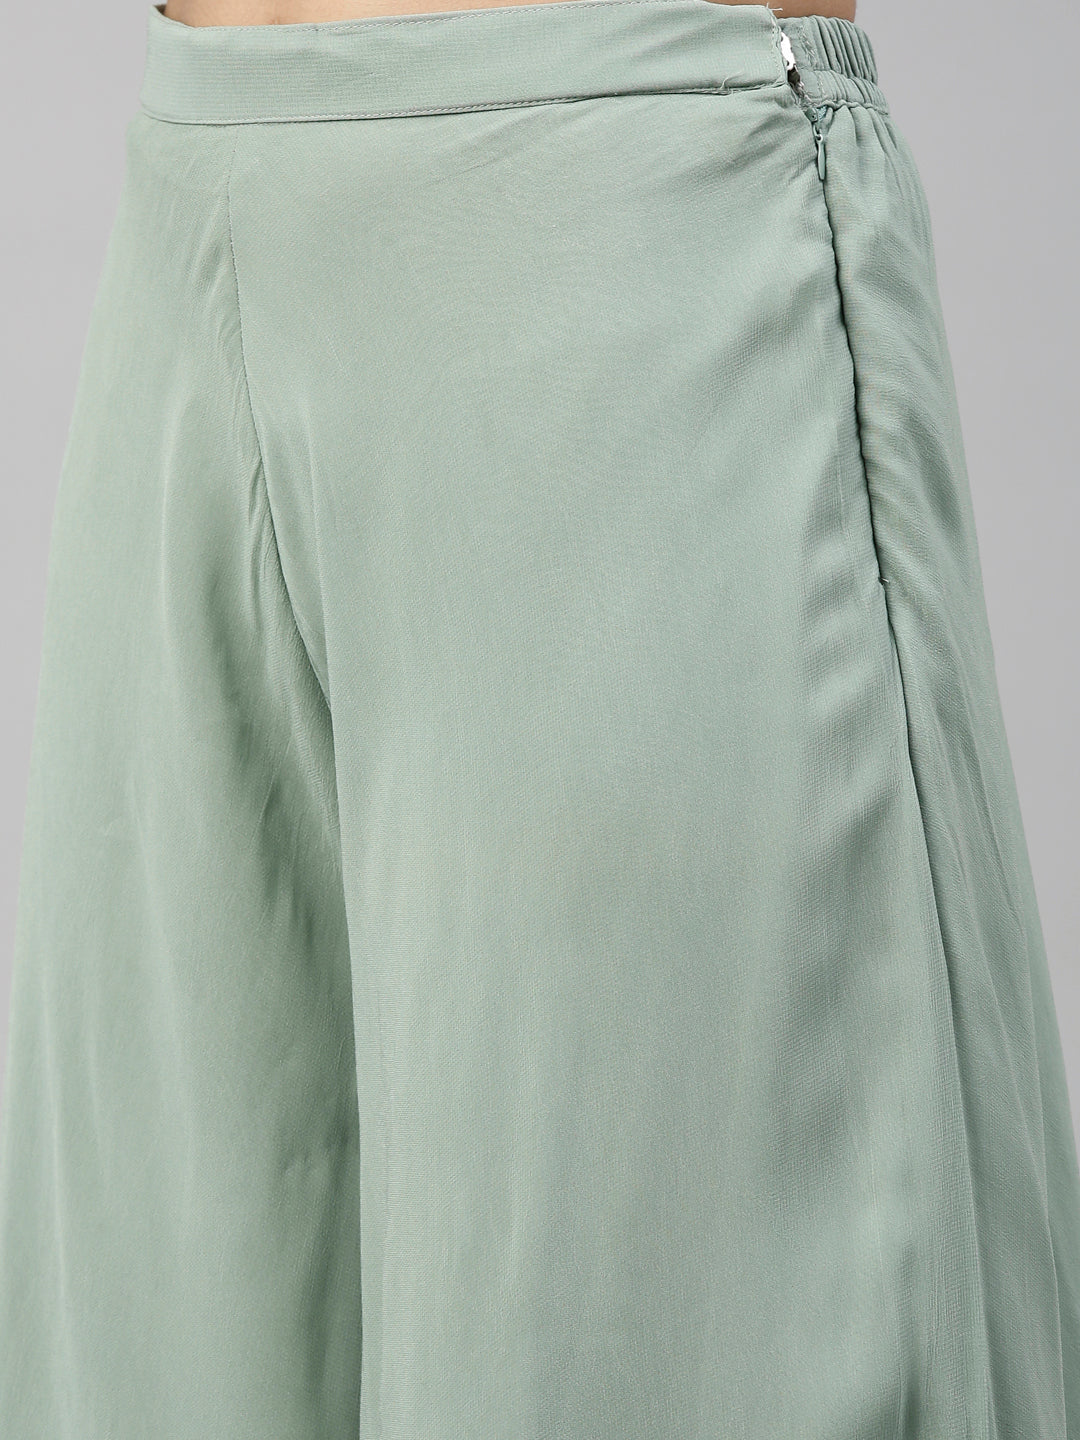 Neeru's Pista Green Color Georgette Fabric Suit-Plazzo